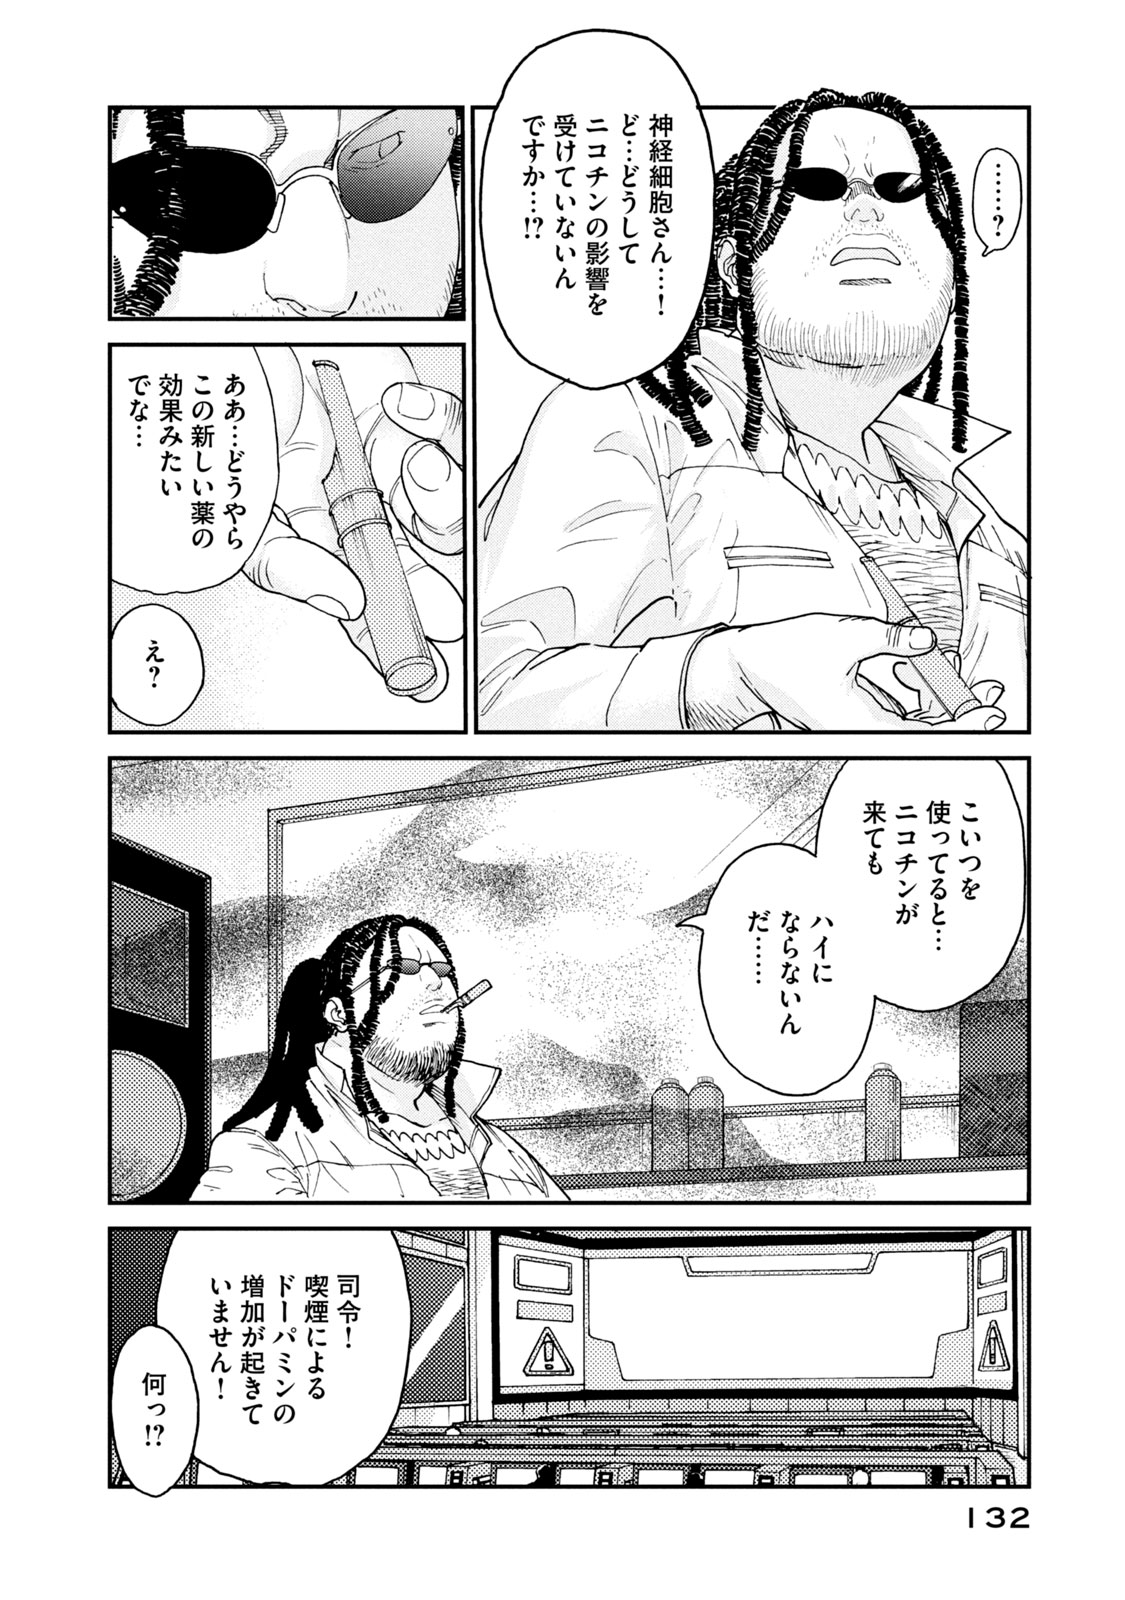 Hataraku Saibou BLACK - Chapter 36 - Page 10